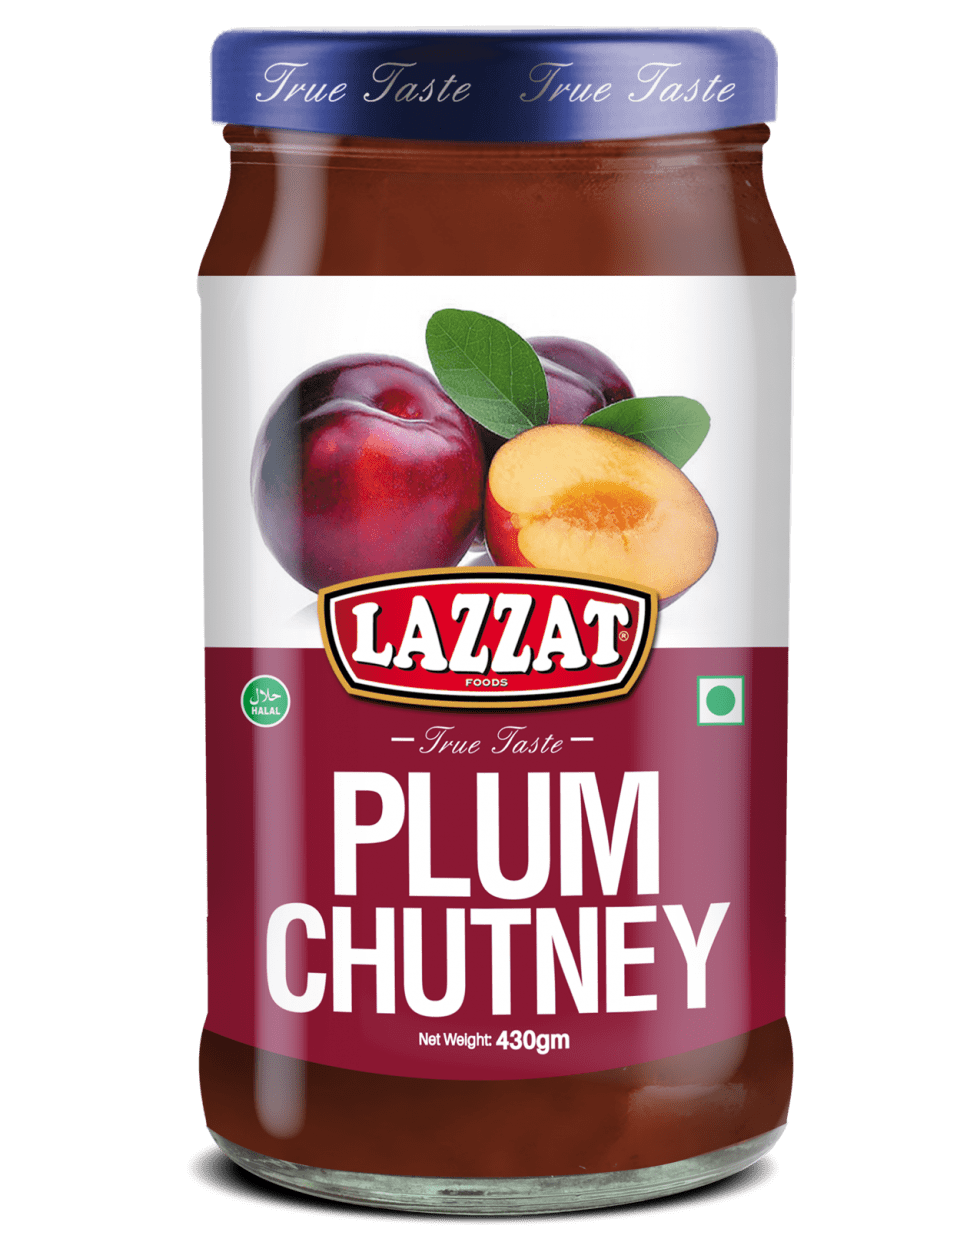 Plum Chutney - LAZZAT FOODS - TRUE TASTE